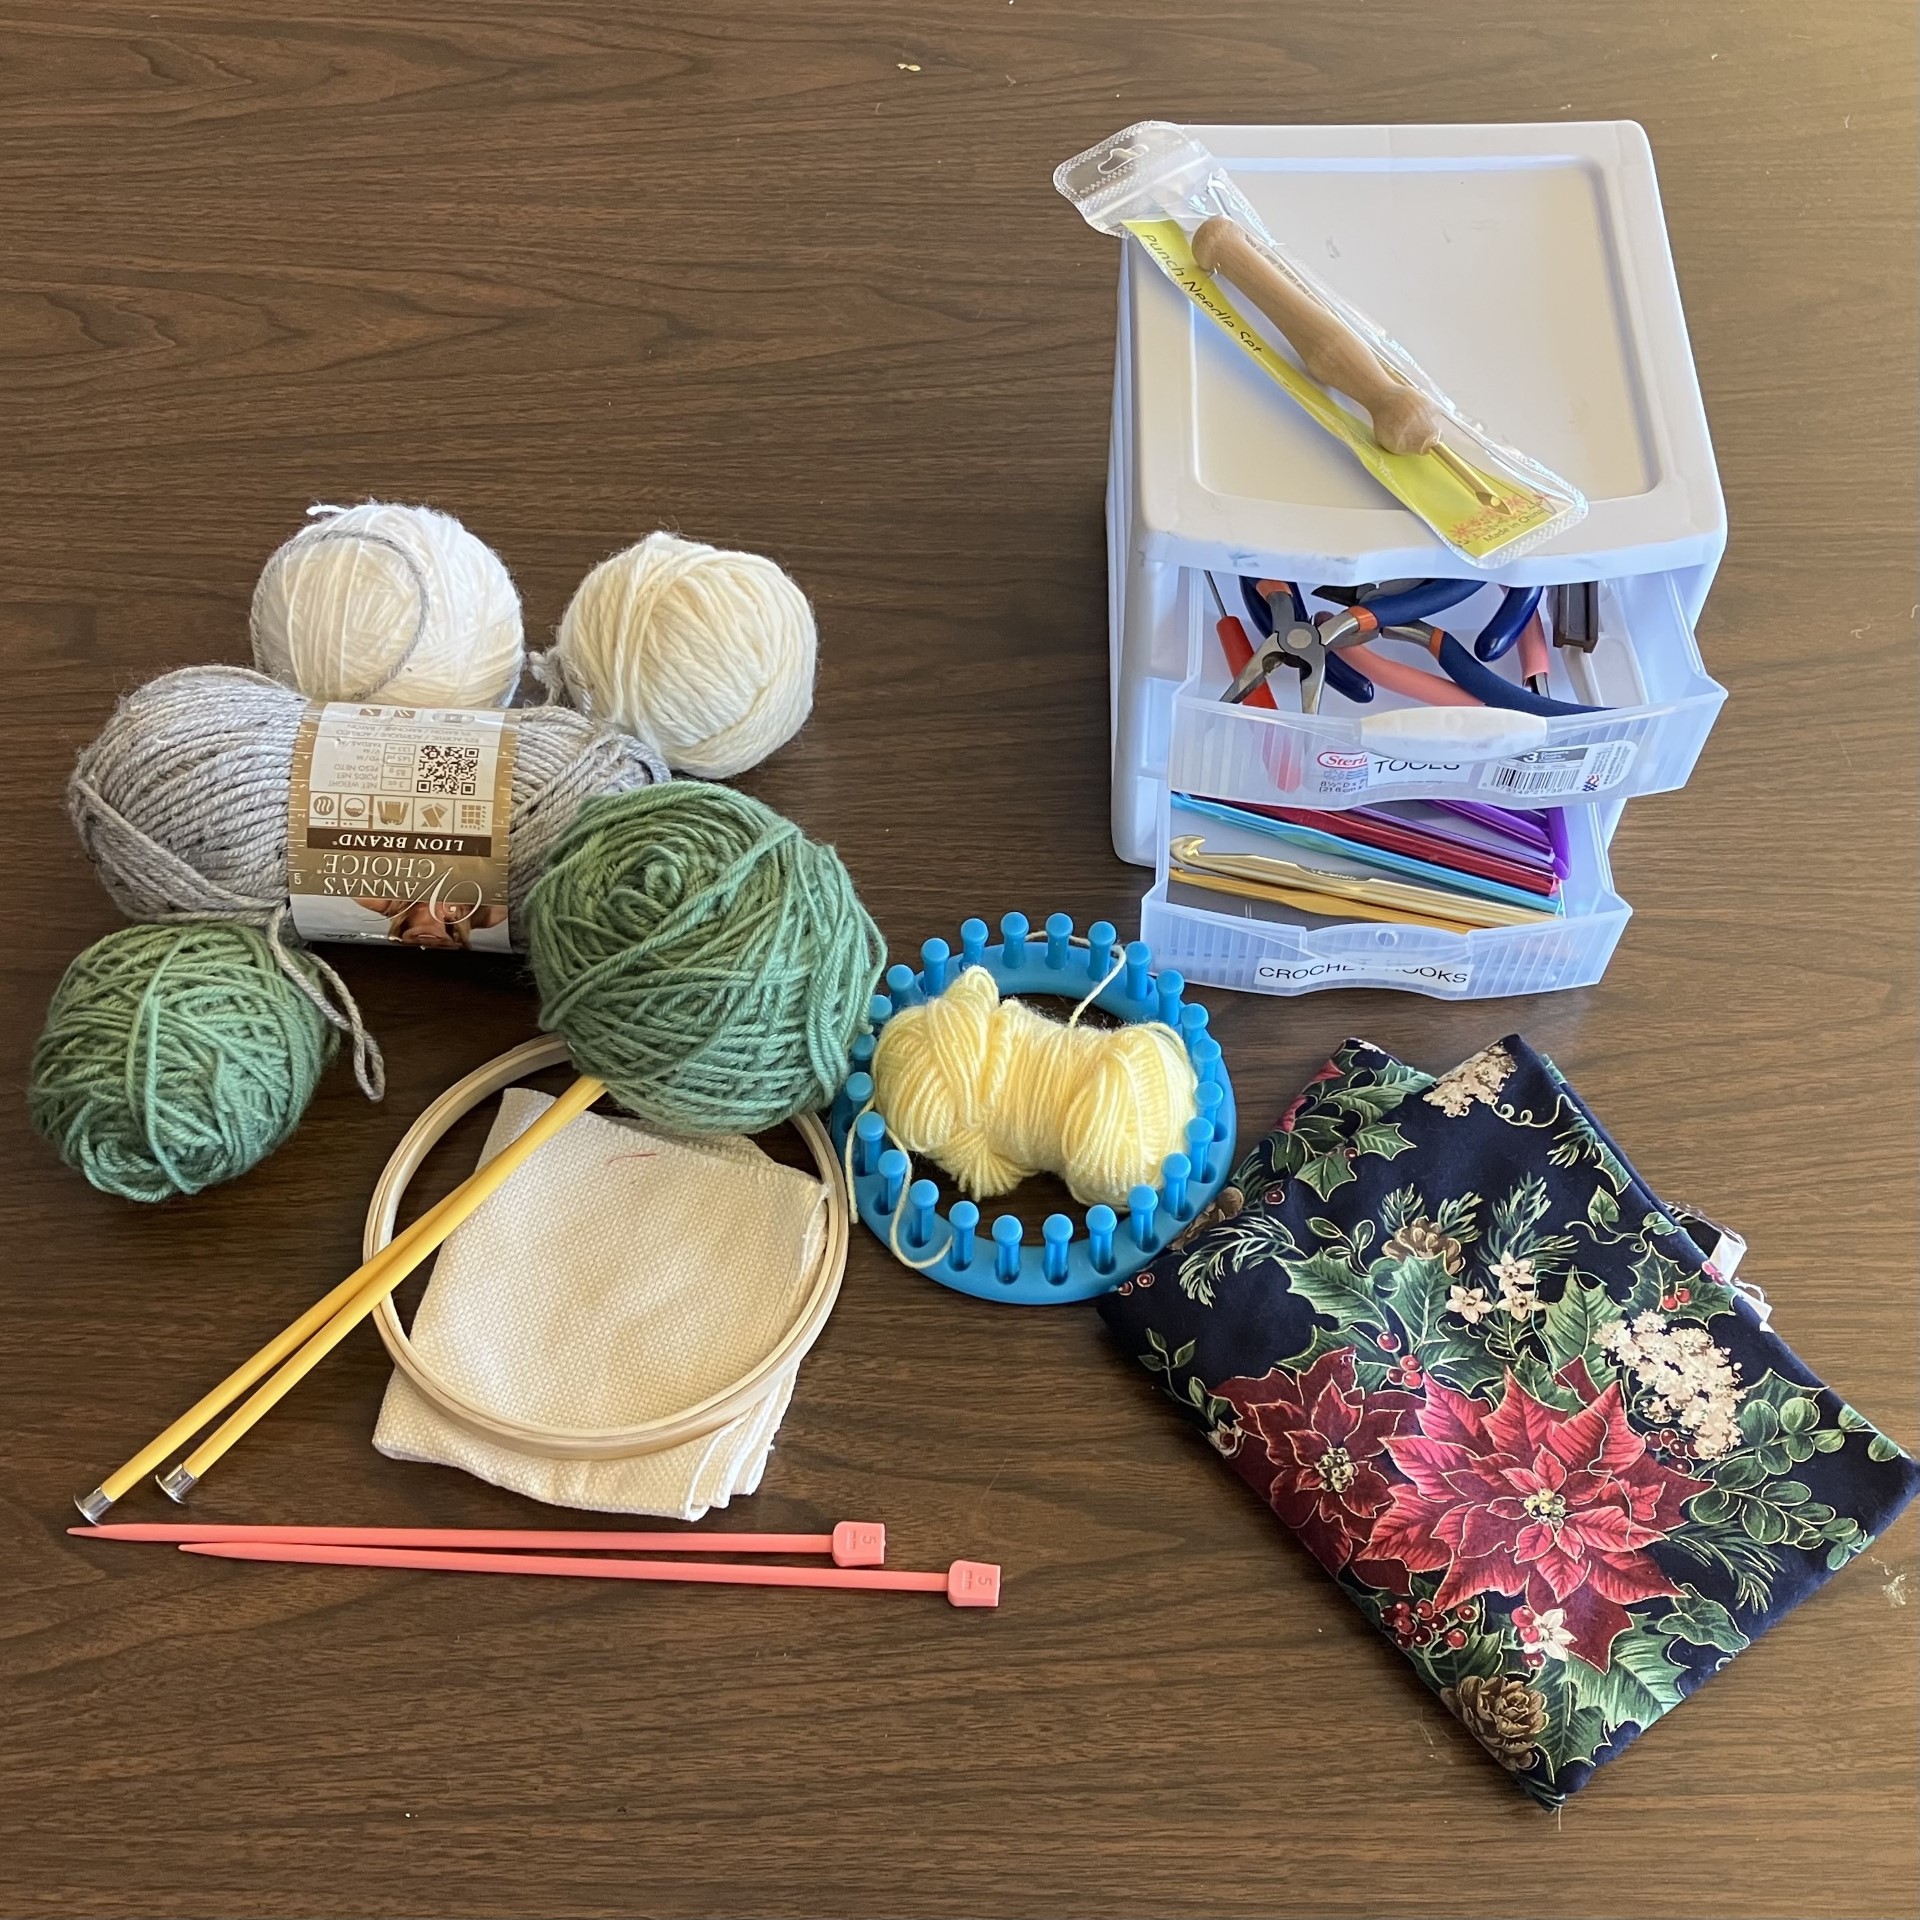 Yarn, fabric, knitting, and crochet needles